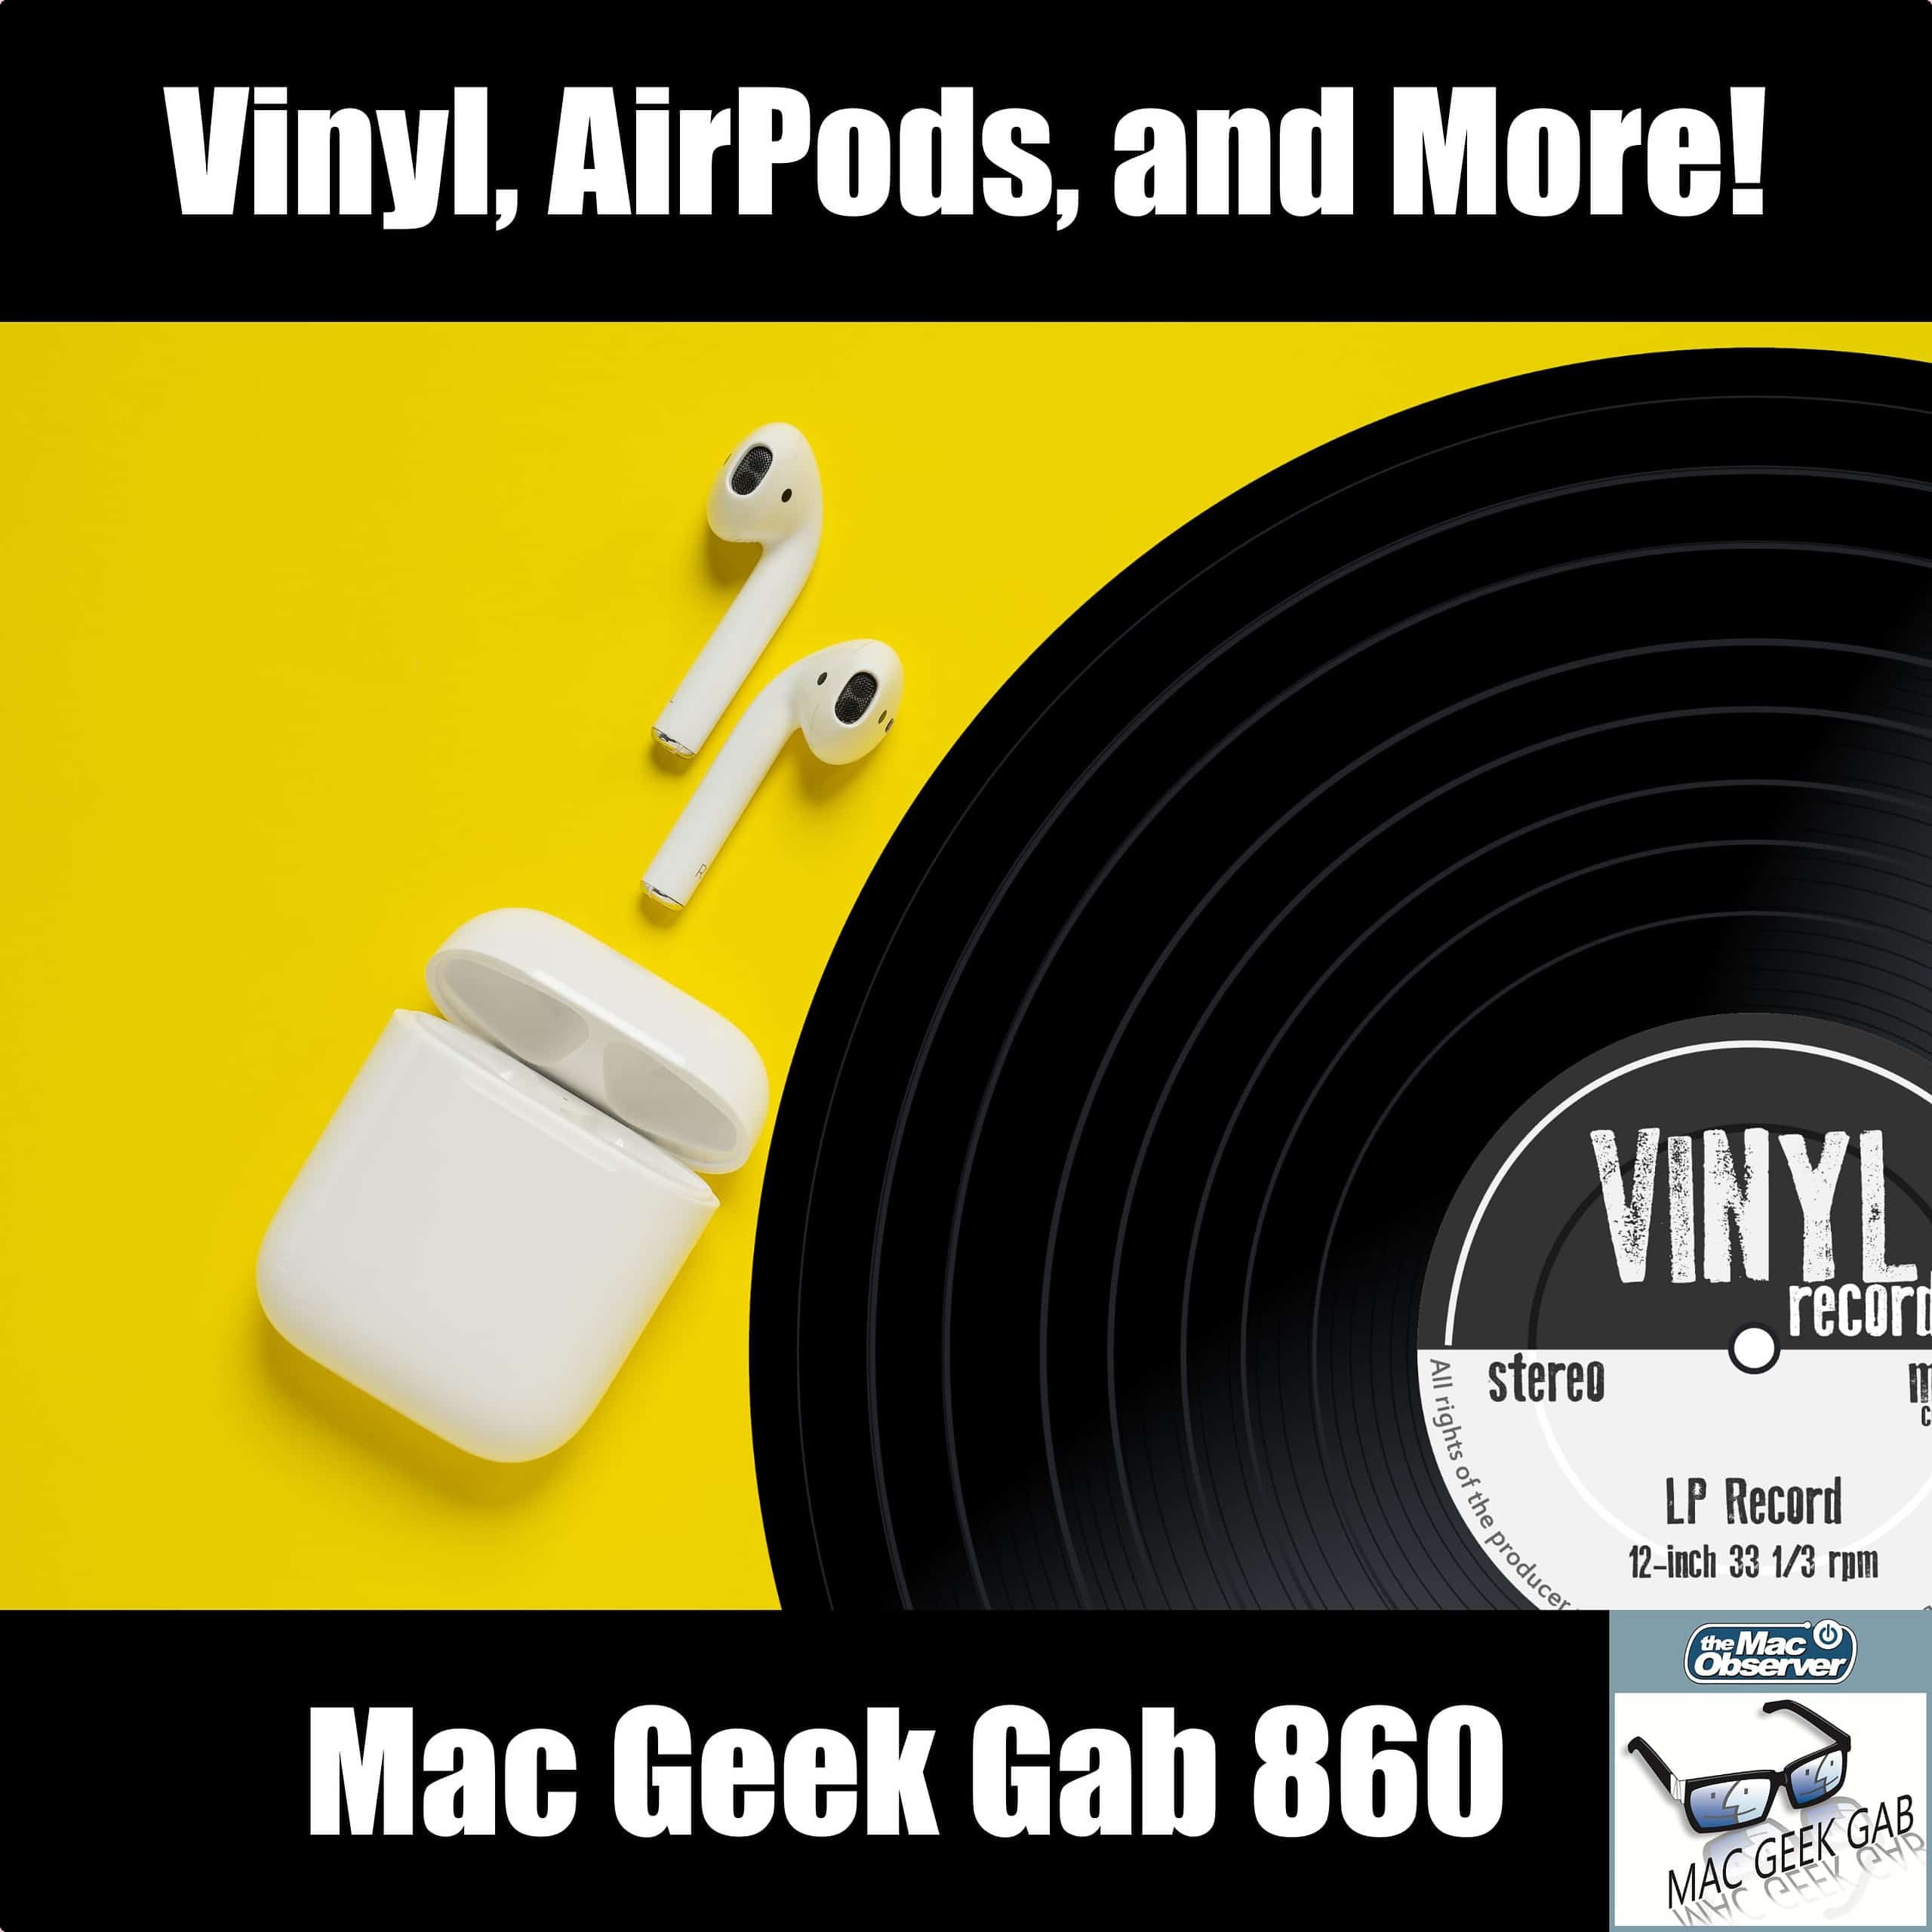 Vinyl, AirPods, and More! — Mac Geek Gab 860